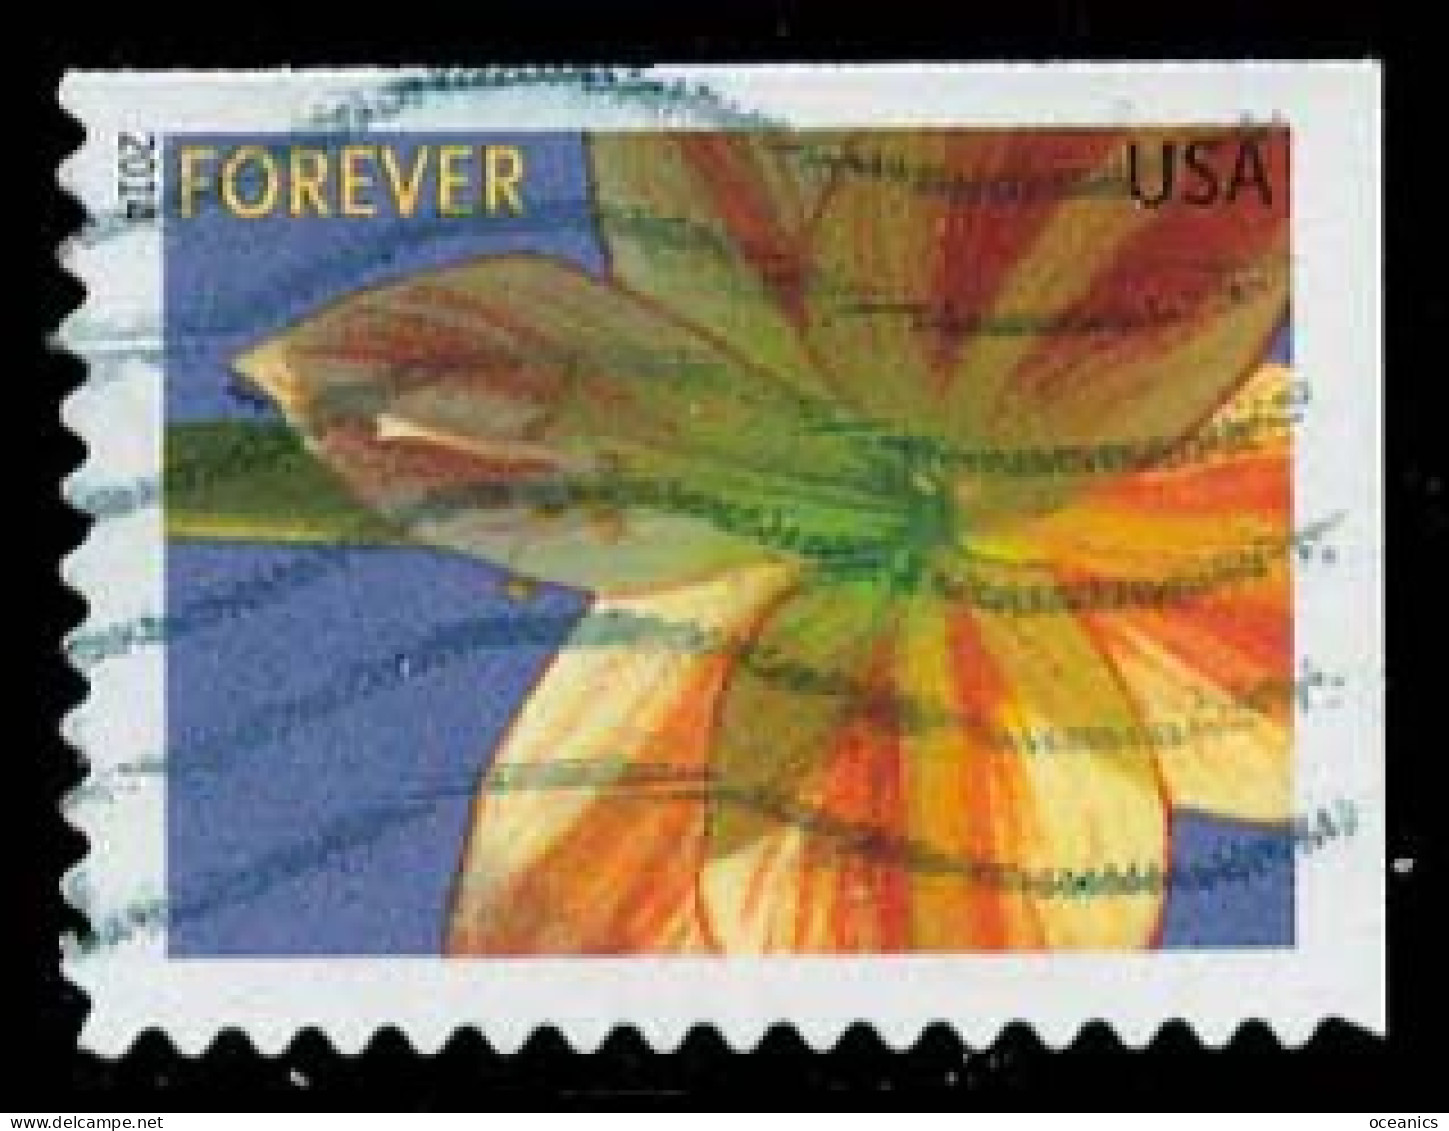 Etats-Unis / United States (Scott No.4862 - Fleur Hivernale /Winter Flower) (o) P2 - Used Stamps